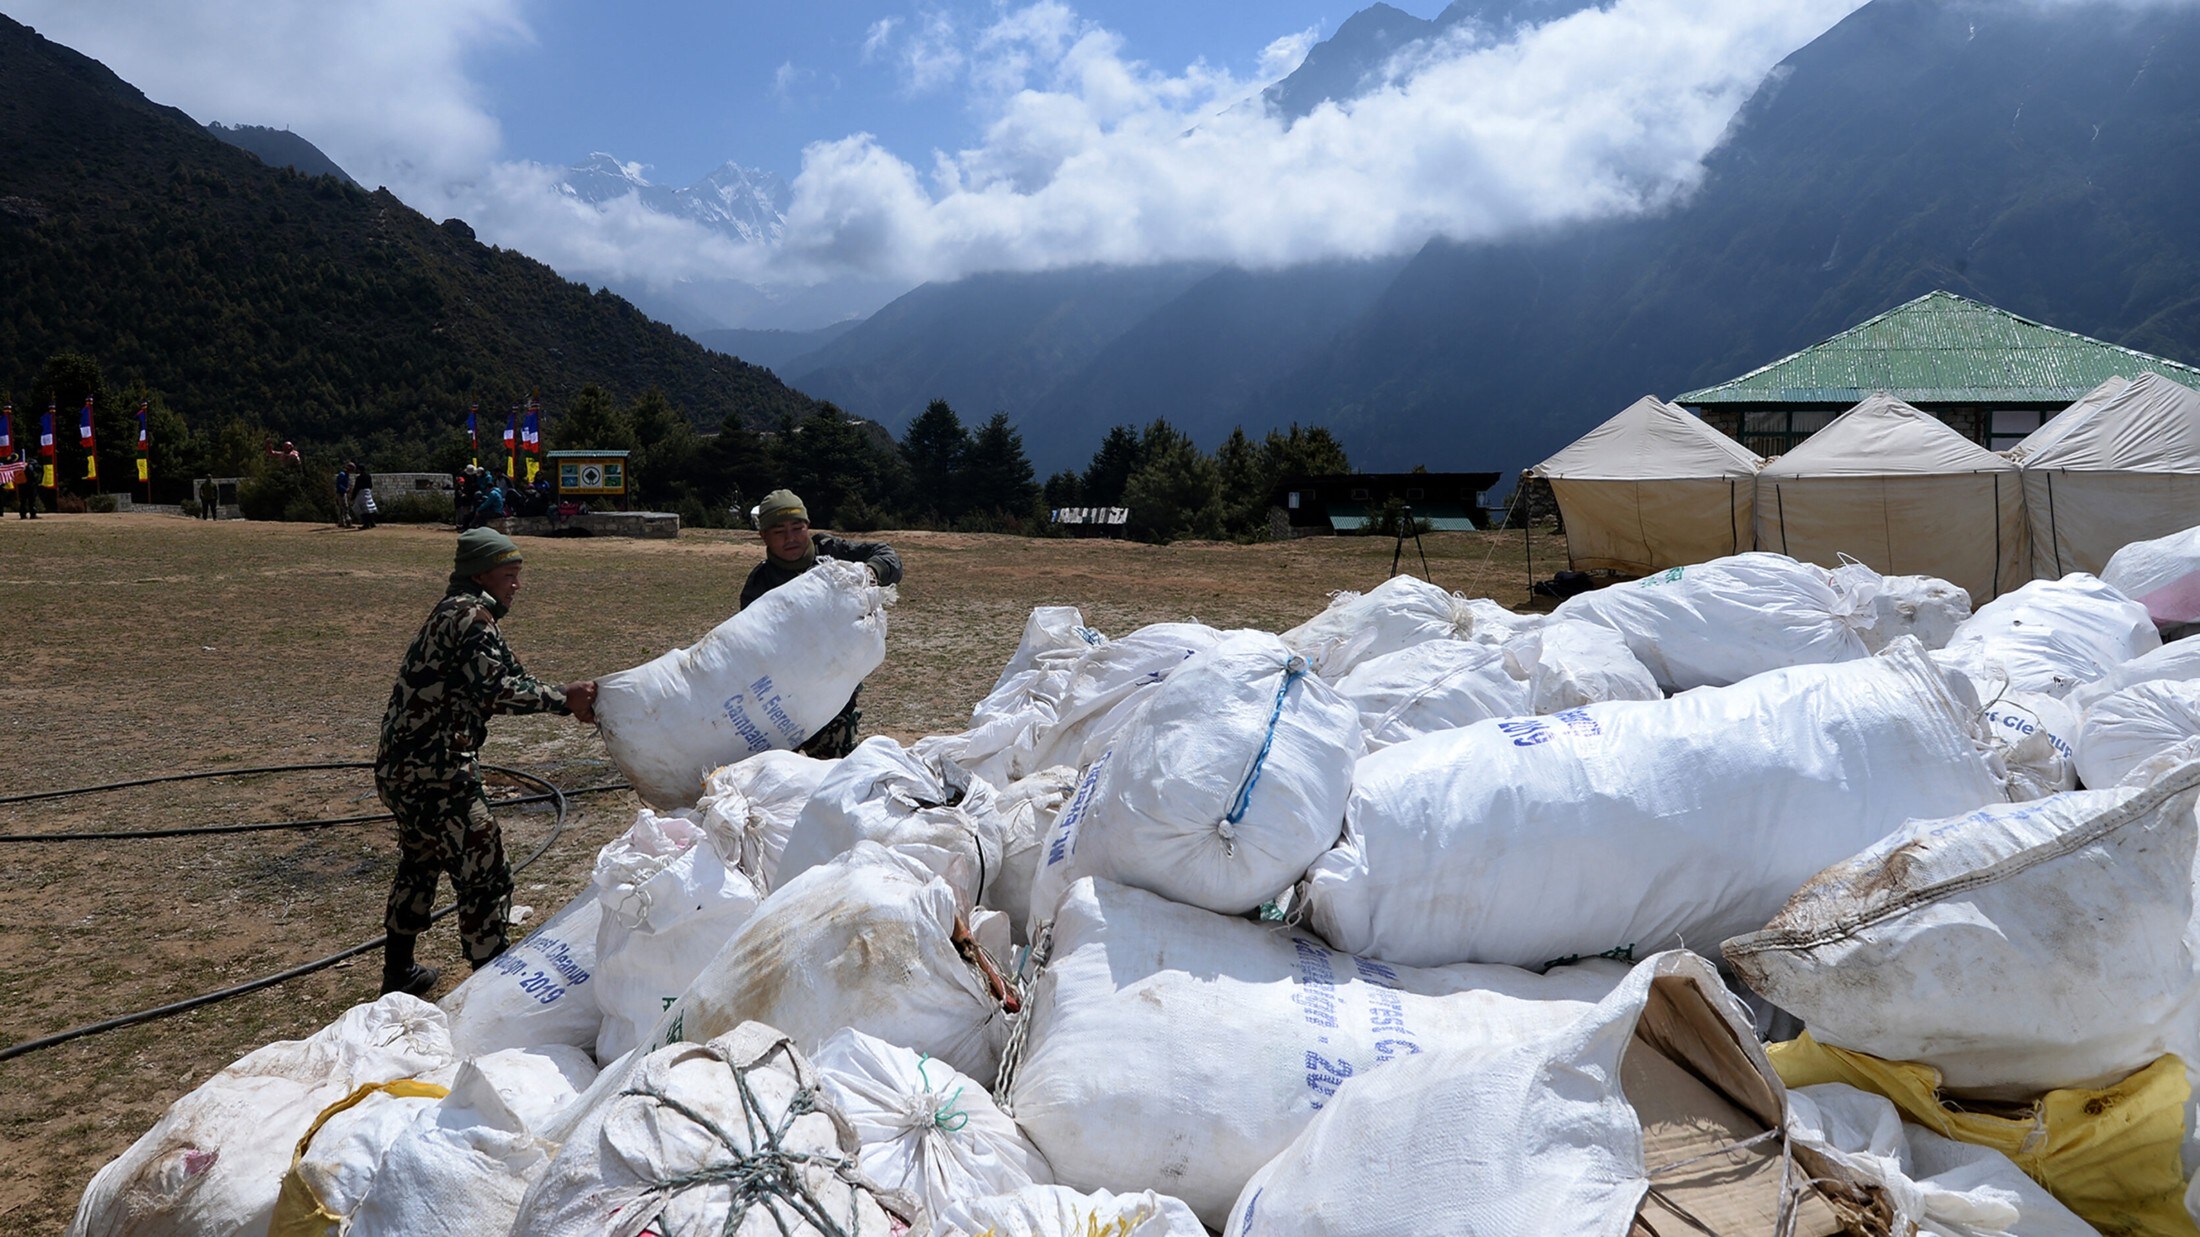 Severe poop problem - Mount Everest: poop has to go back in bags